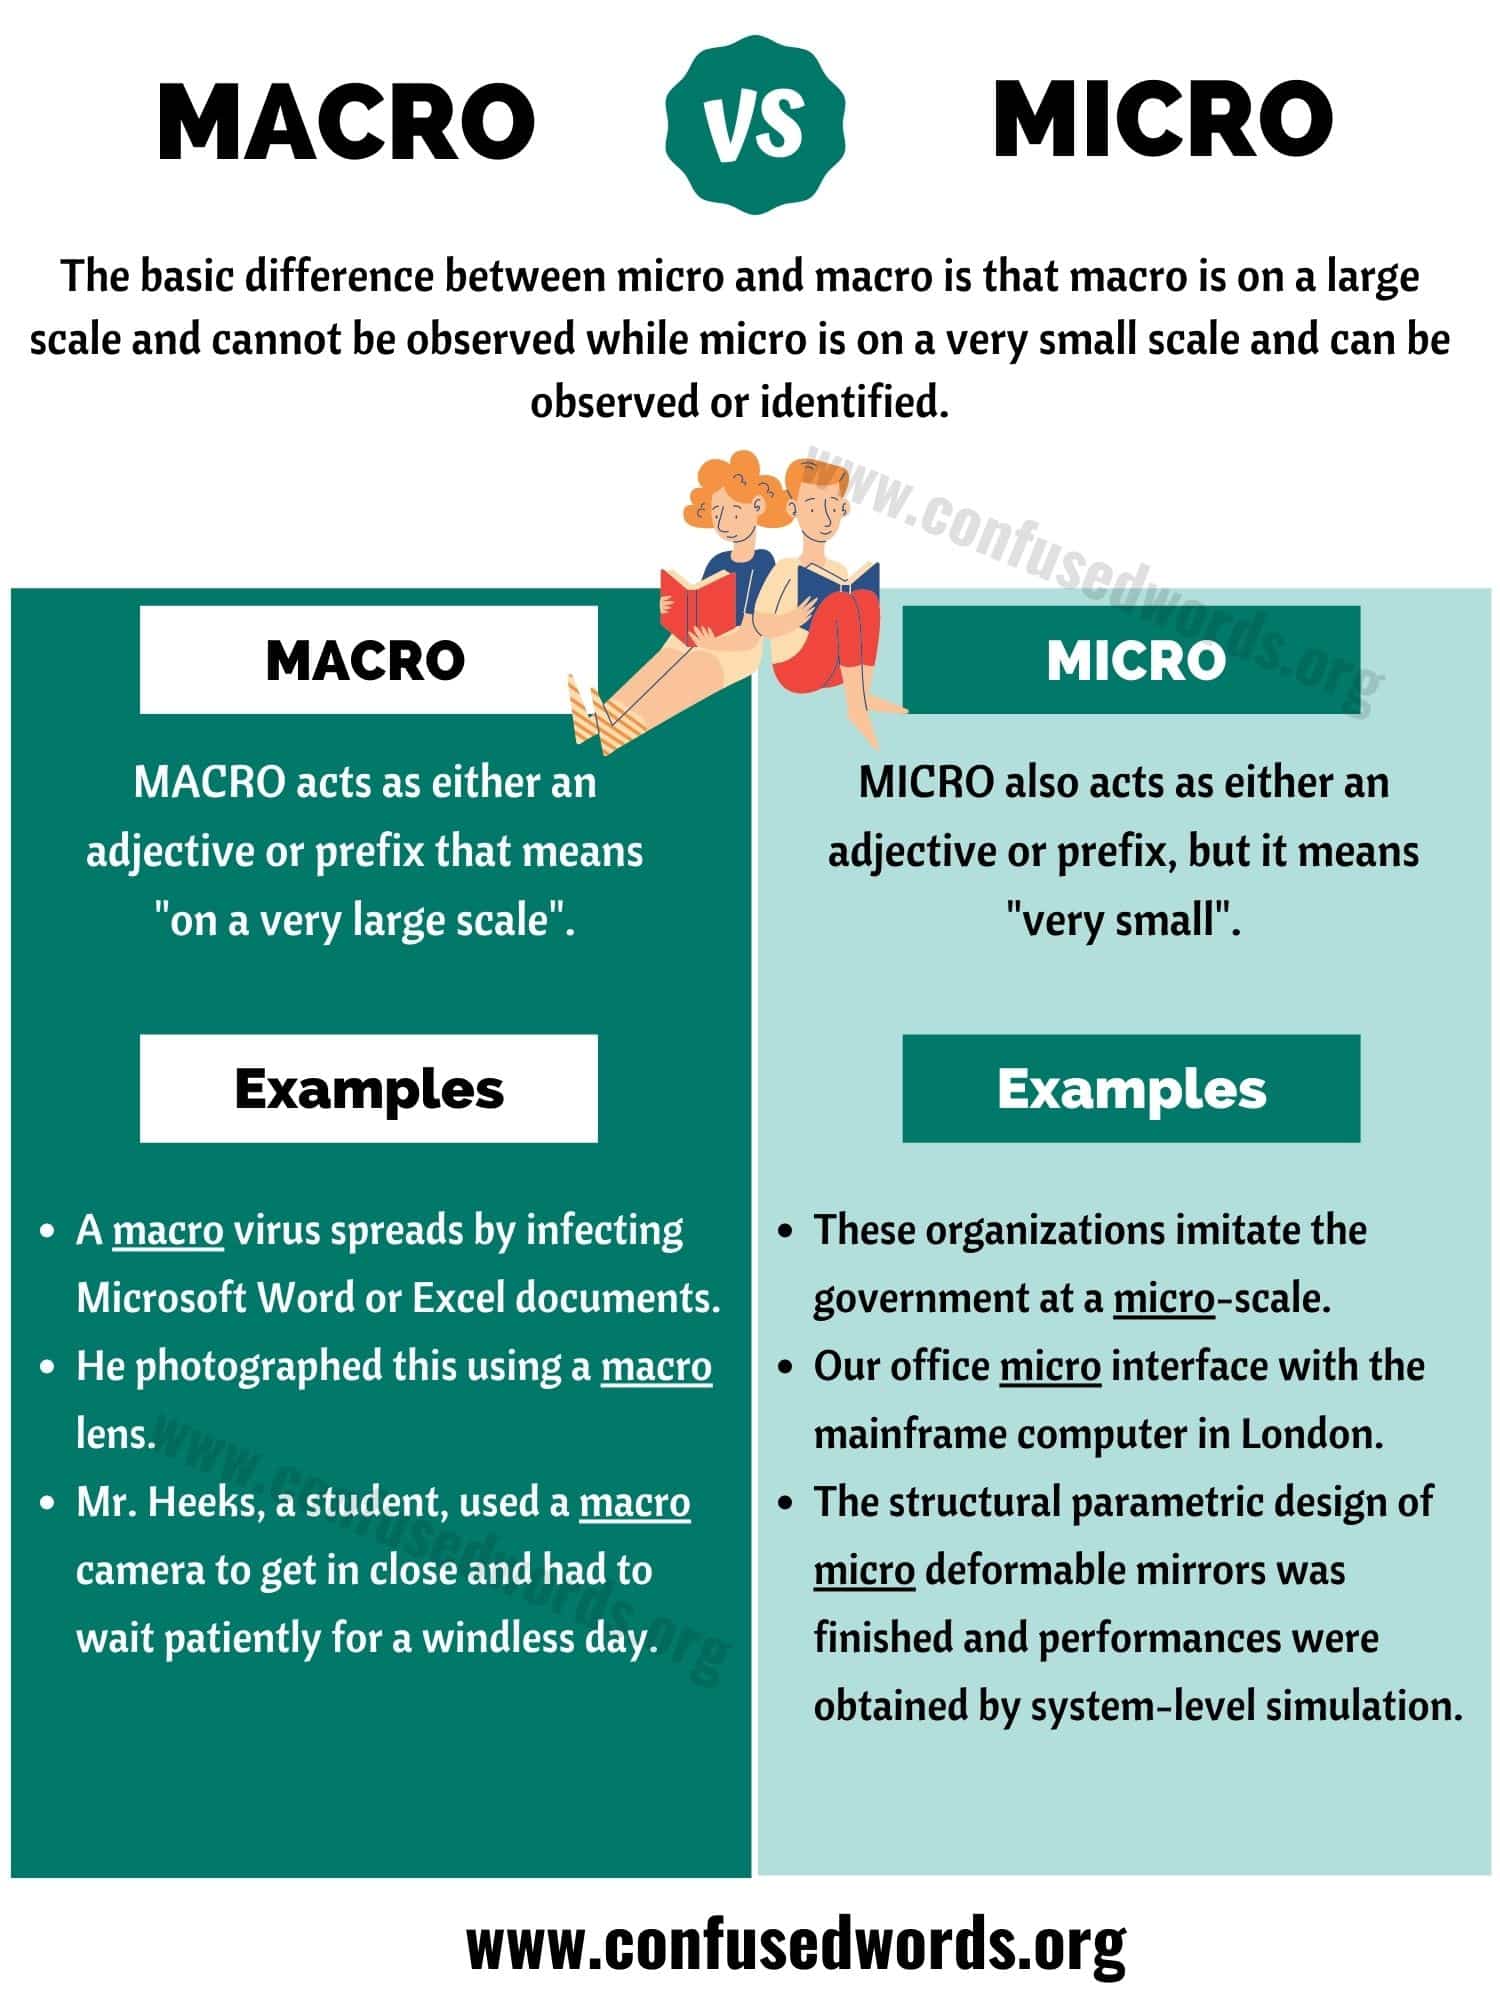 Macro vs Micro